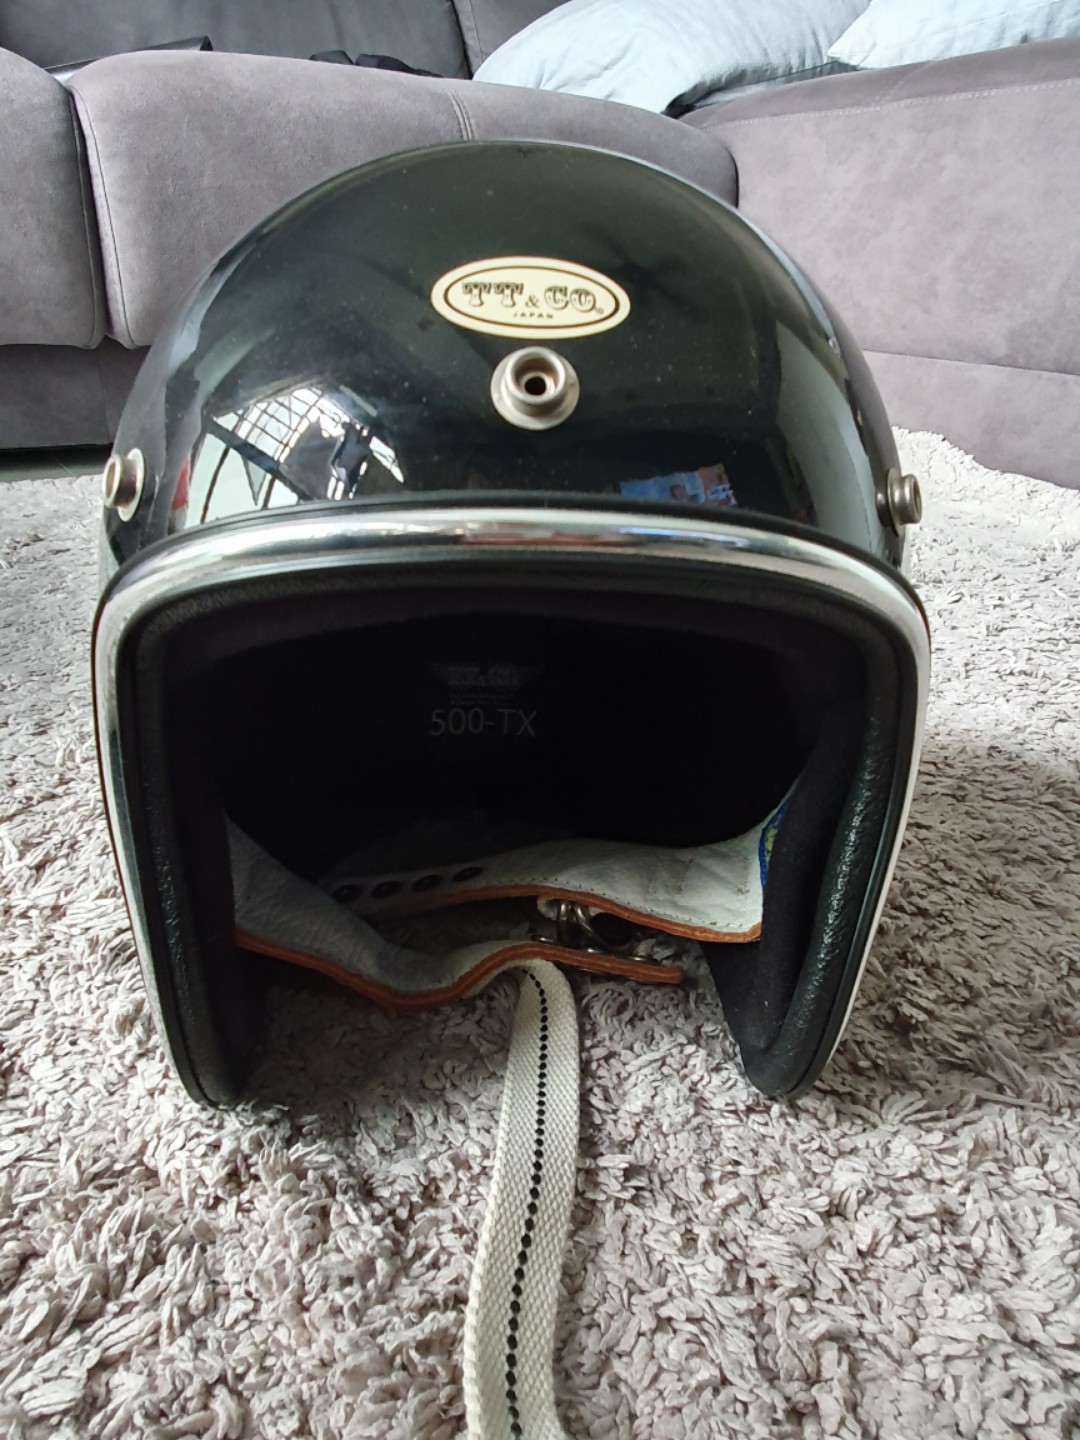 TT&CO 500tx helmet, Motorcycles, Motorcycle Accessories on Carousell